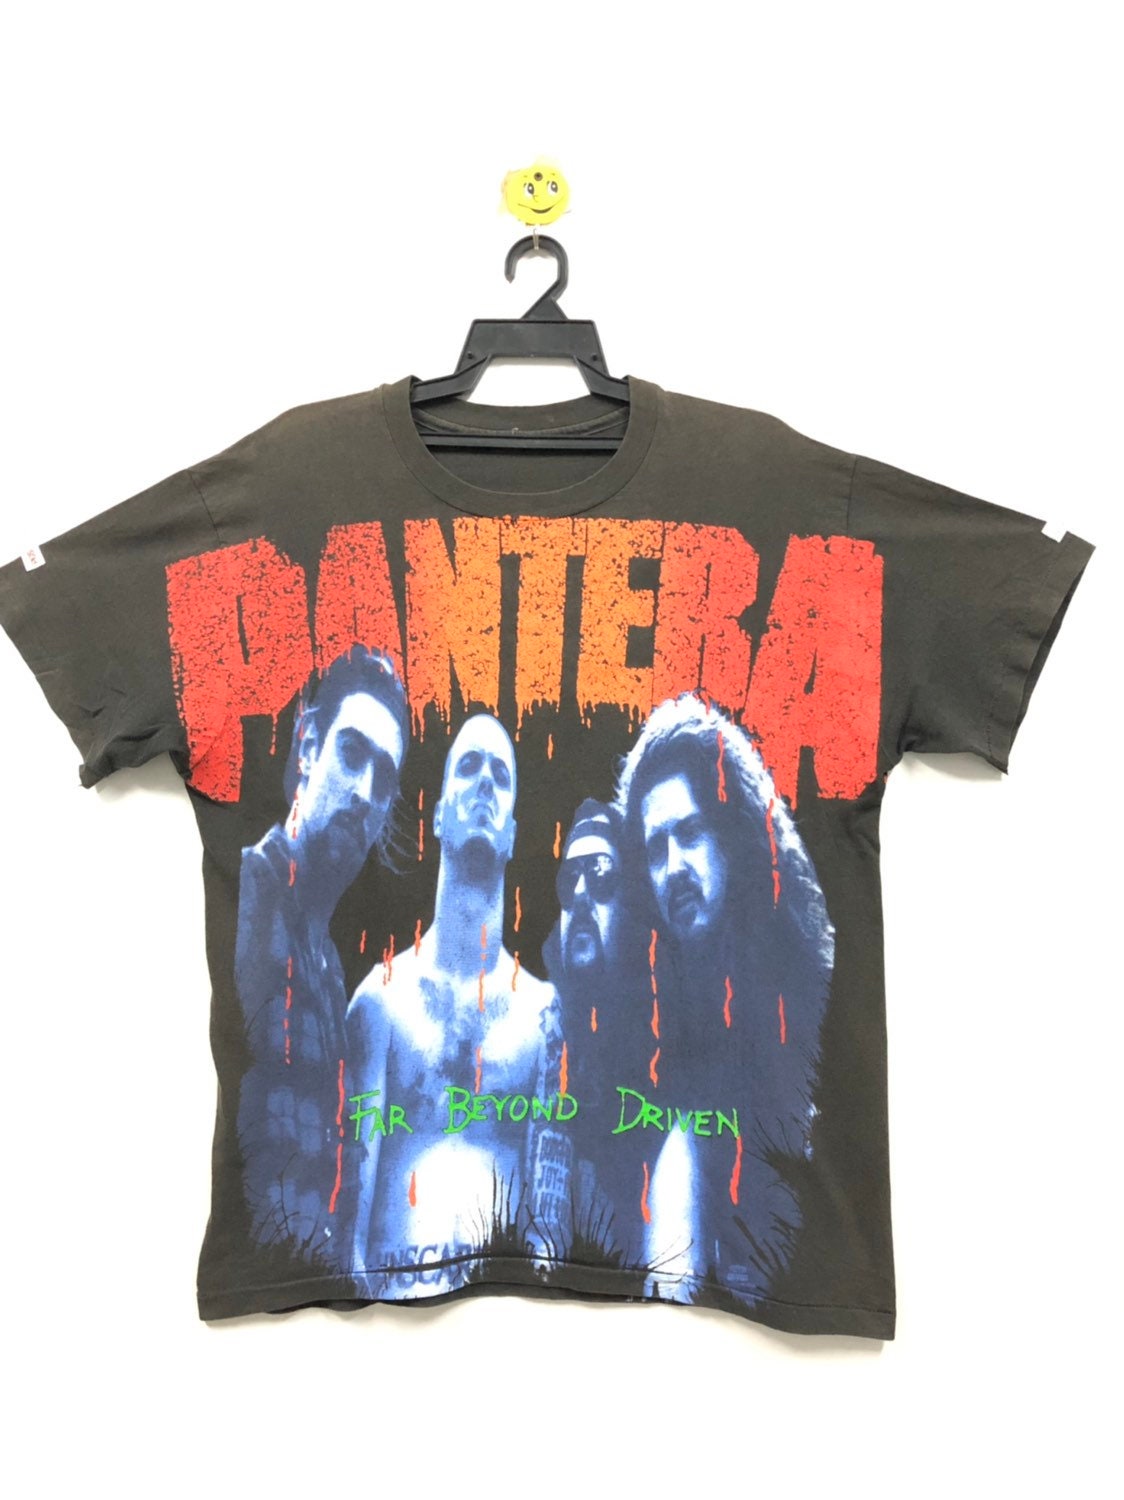 Vintage pantera far beyond driven full print t shirt 90s rare | Etsy